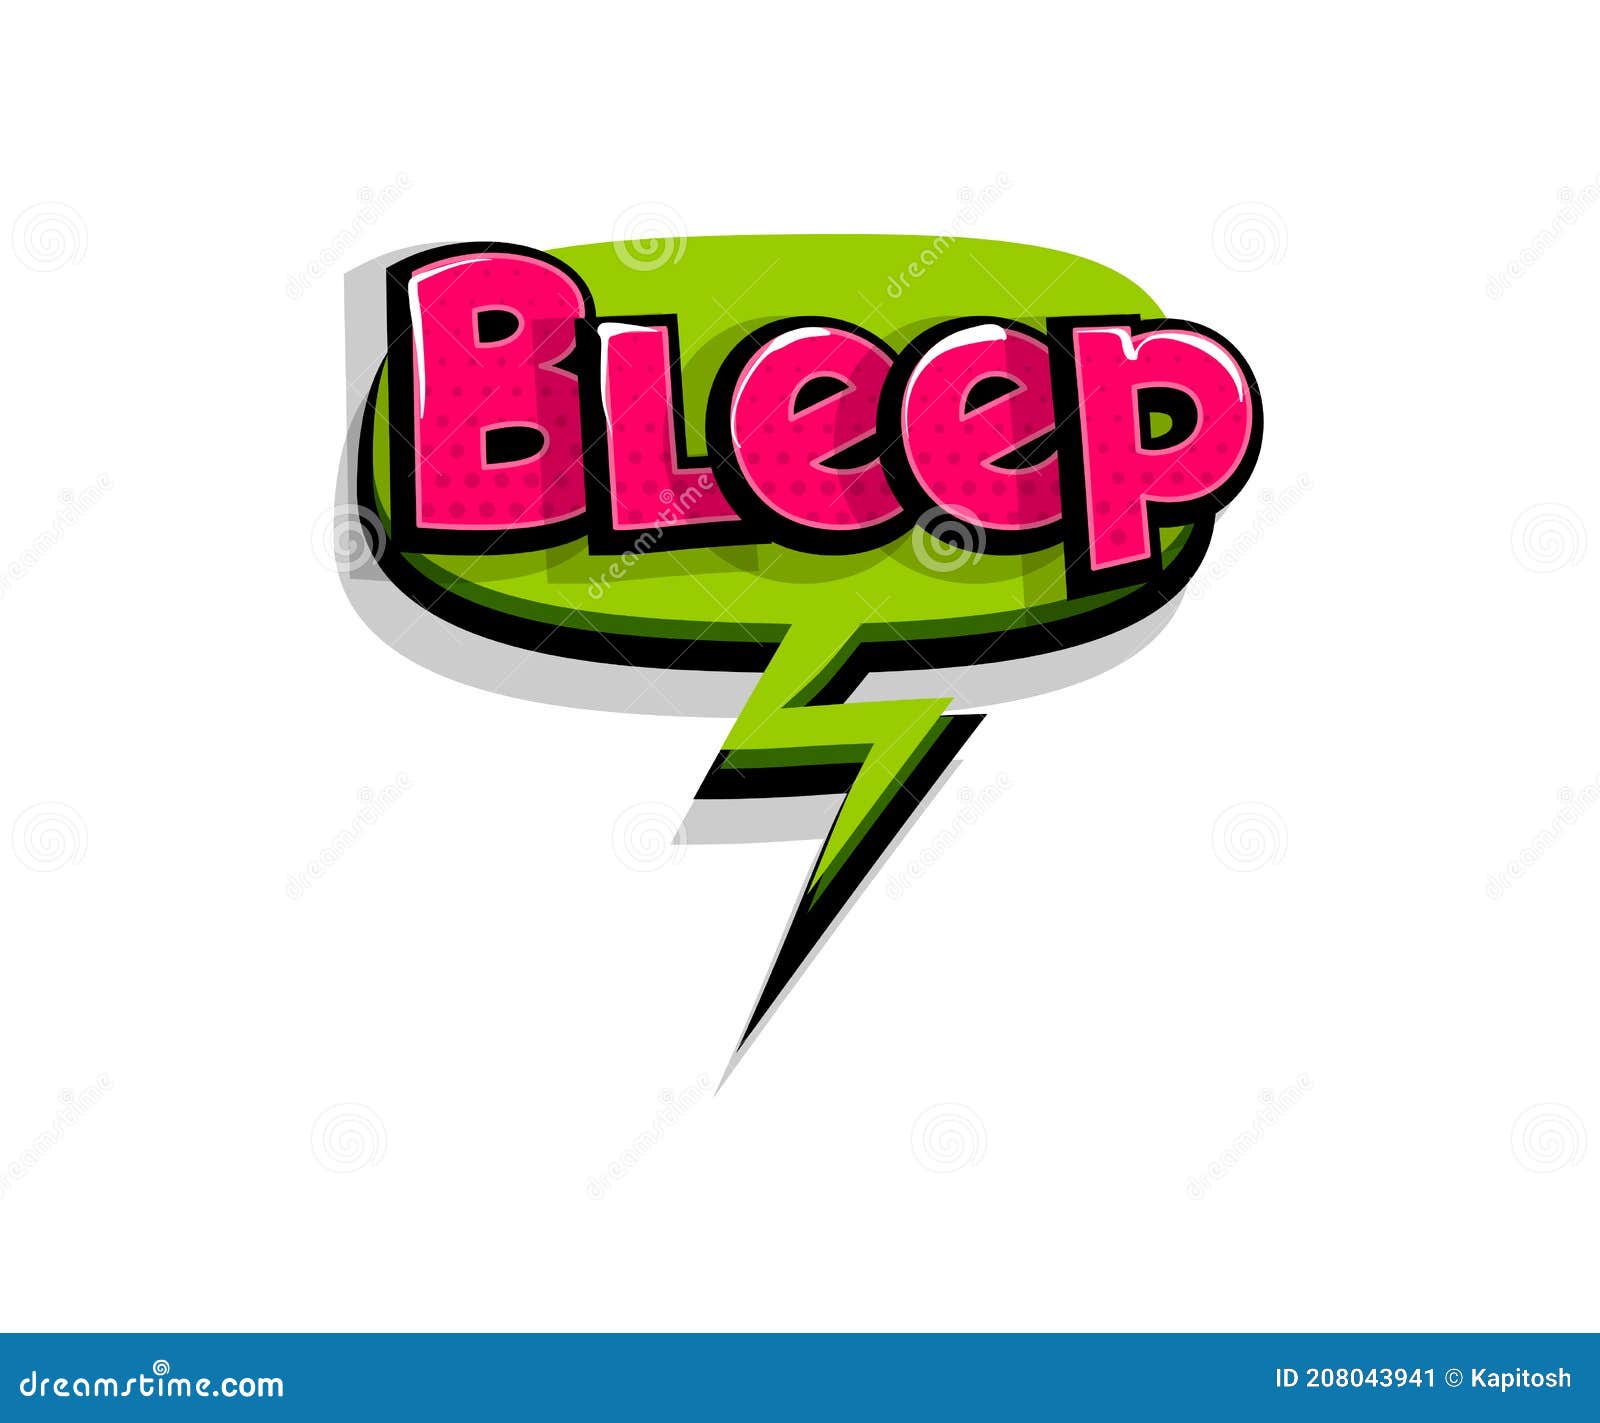 comic text bleep, beep, logo sound effects